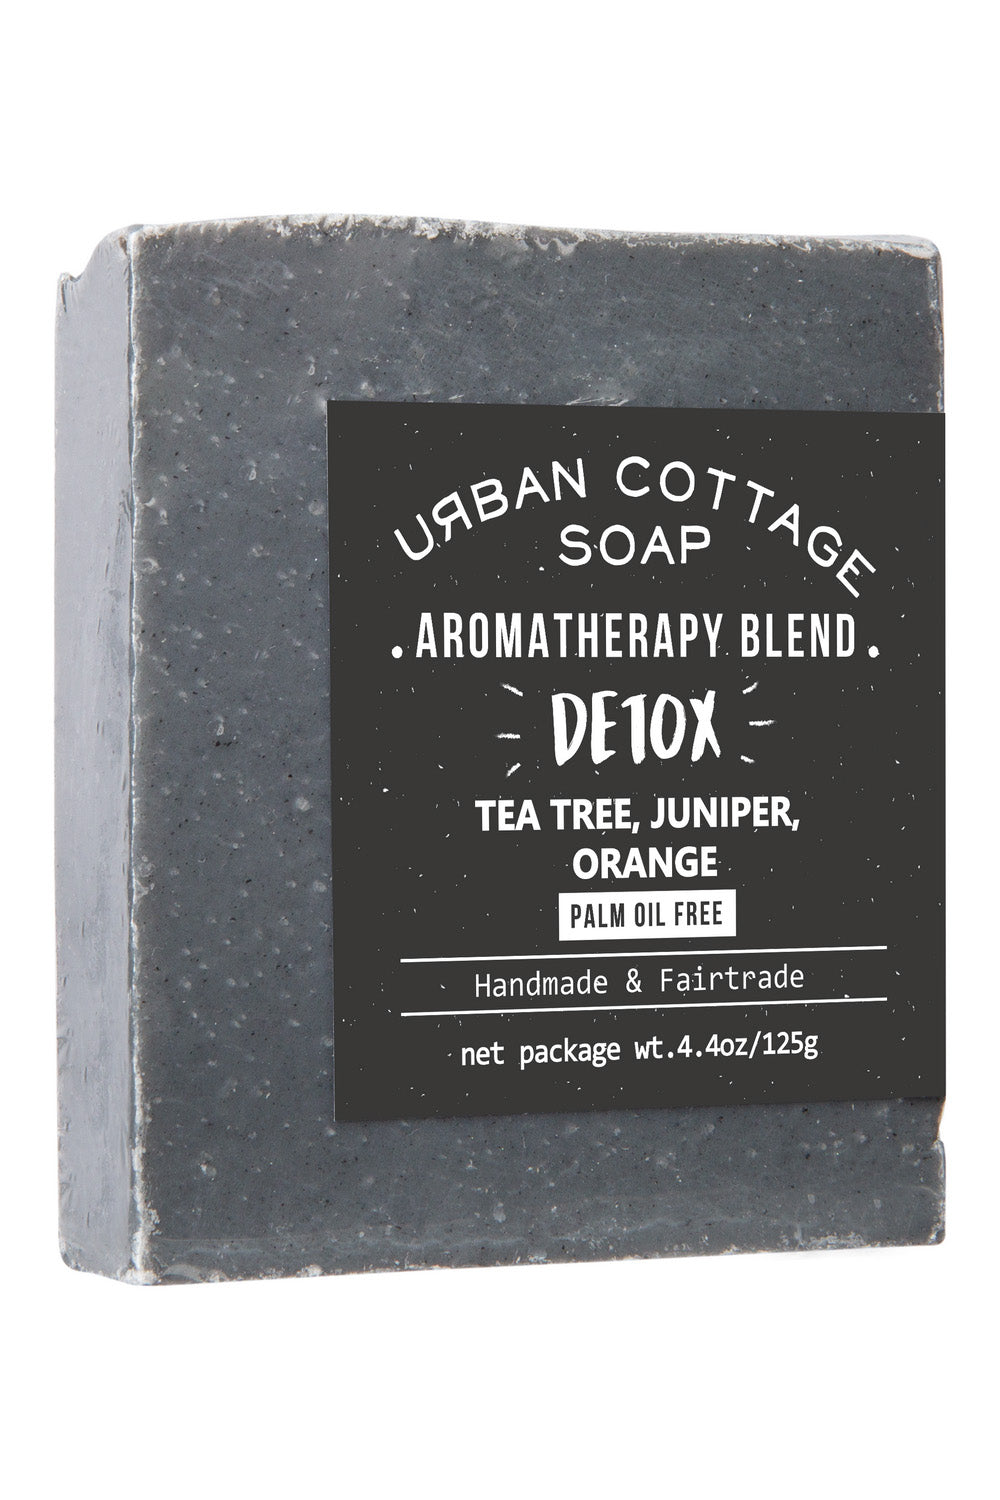 Urban Cottage Soap Detox